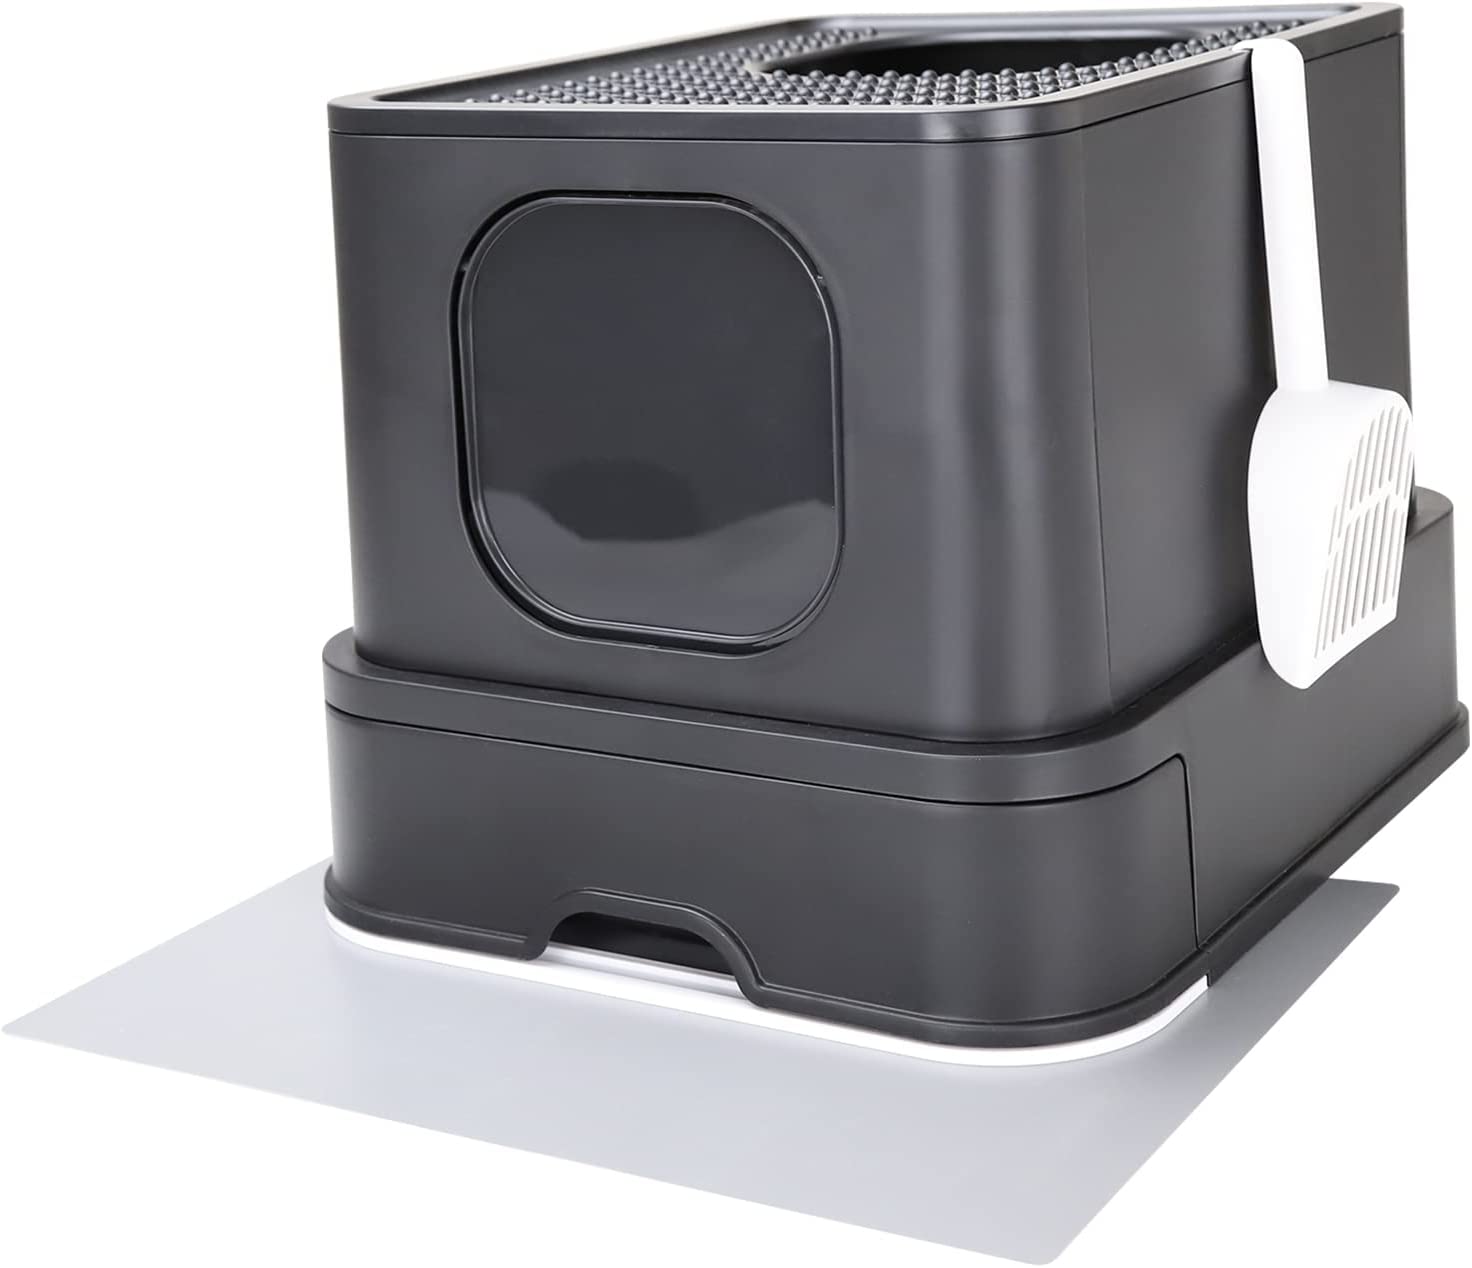 Foldable Cat Litter Box, Large Top Entry Anti-Splashing Litter Box